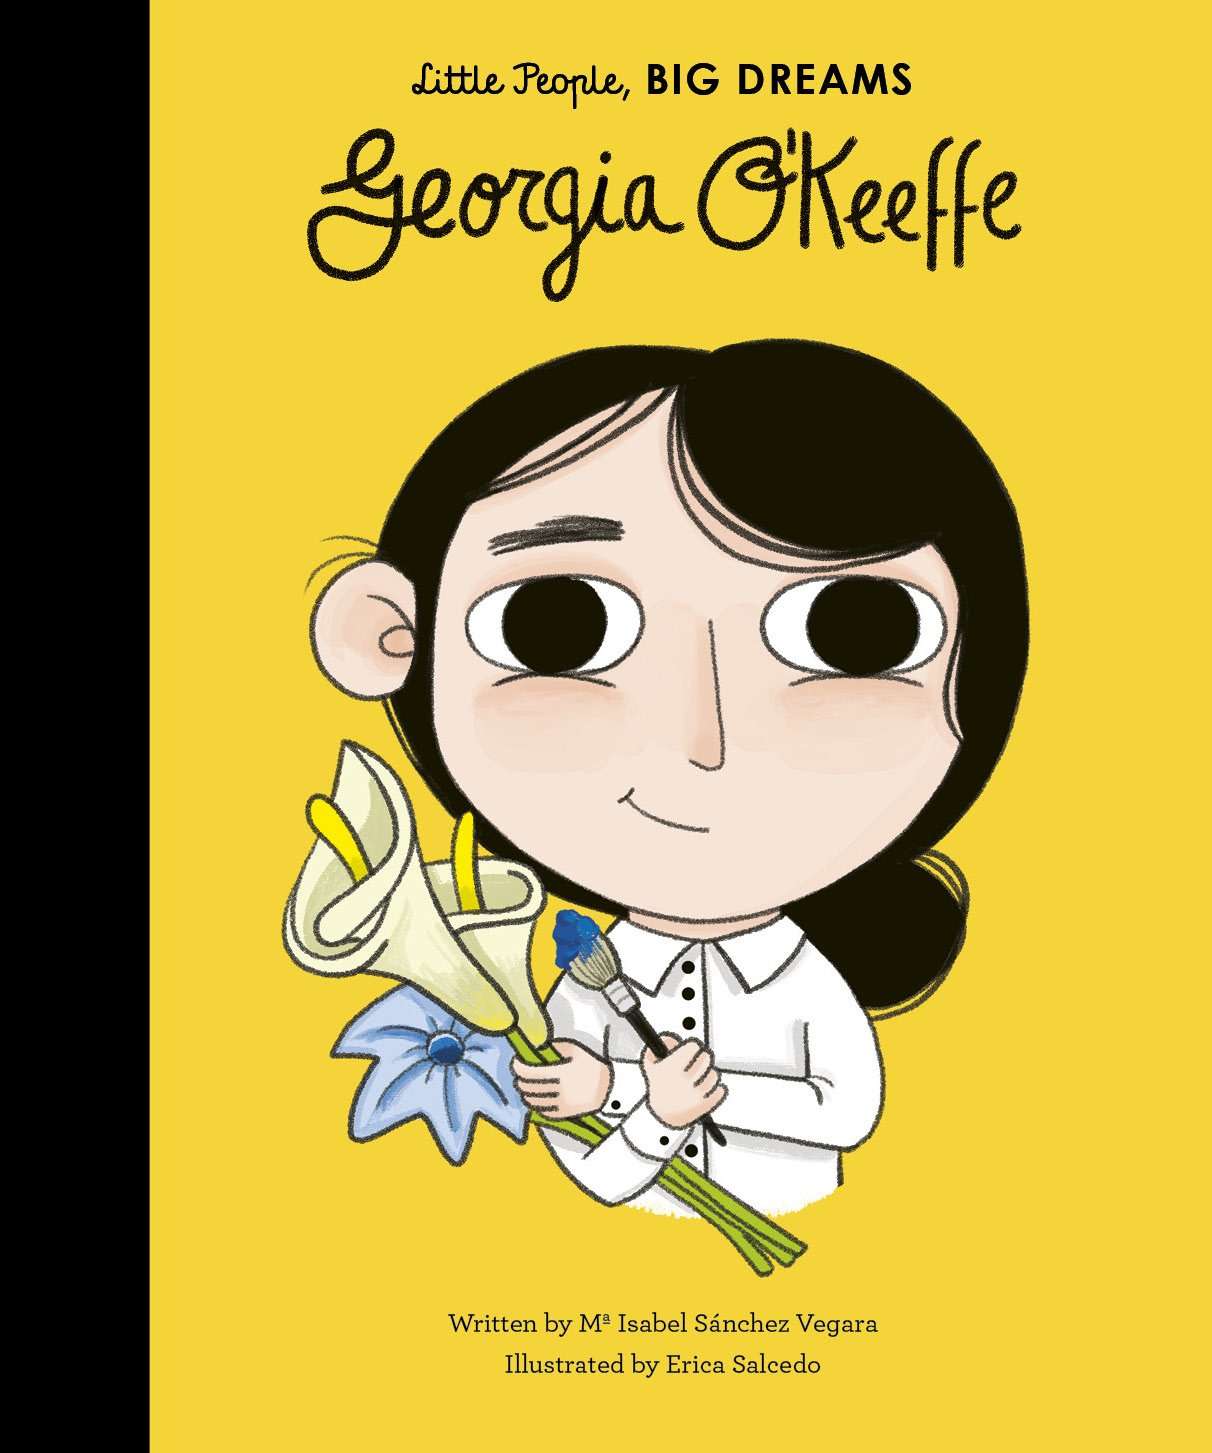 Little People Big Dreams: Georgia O'Keefe